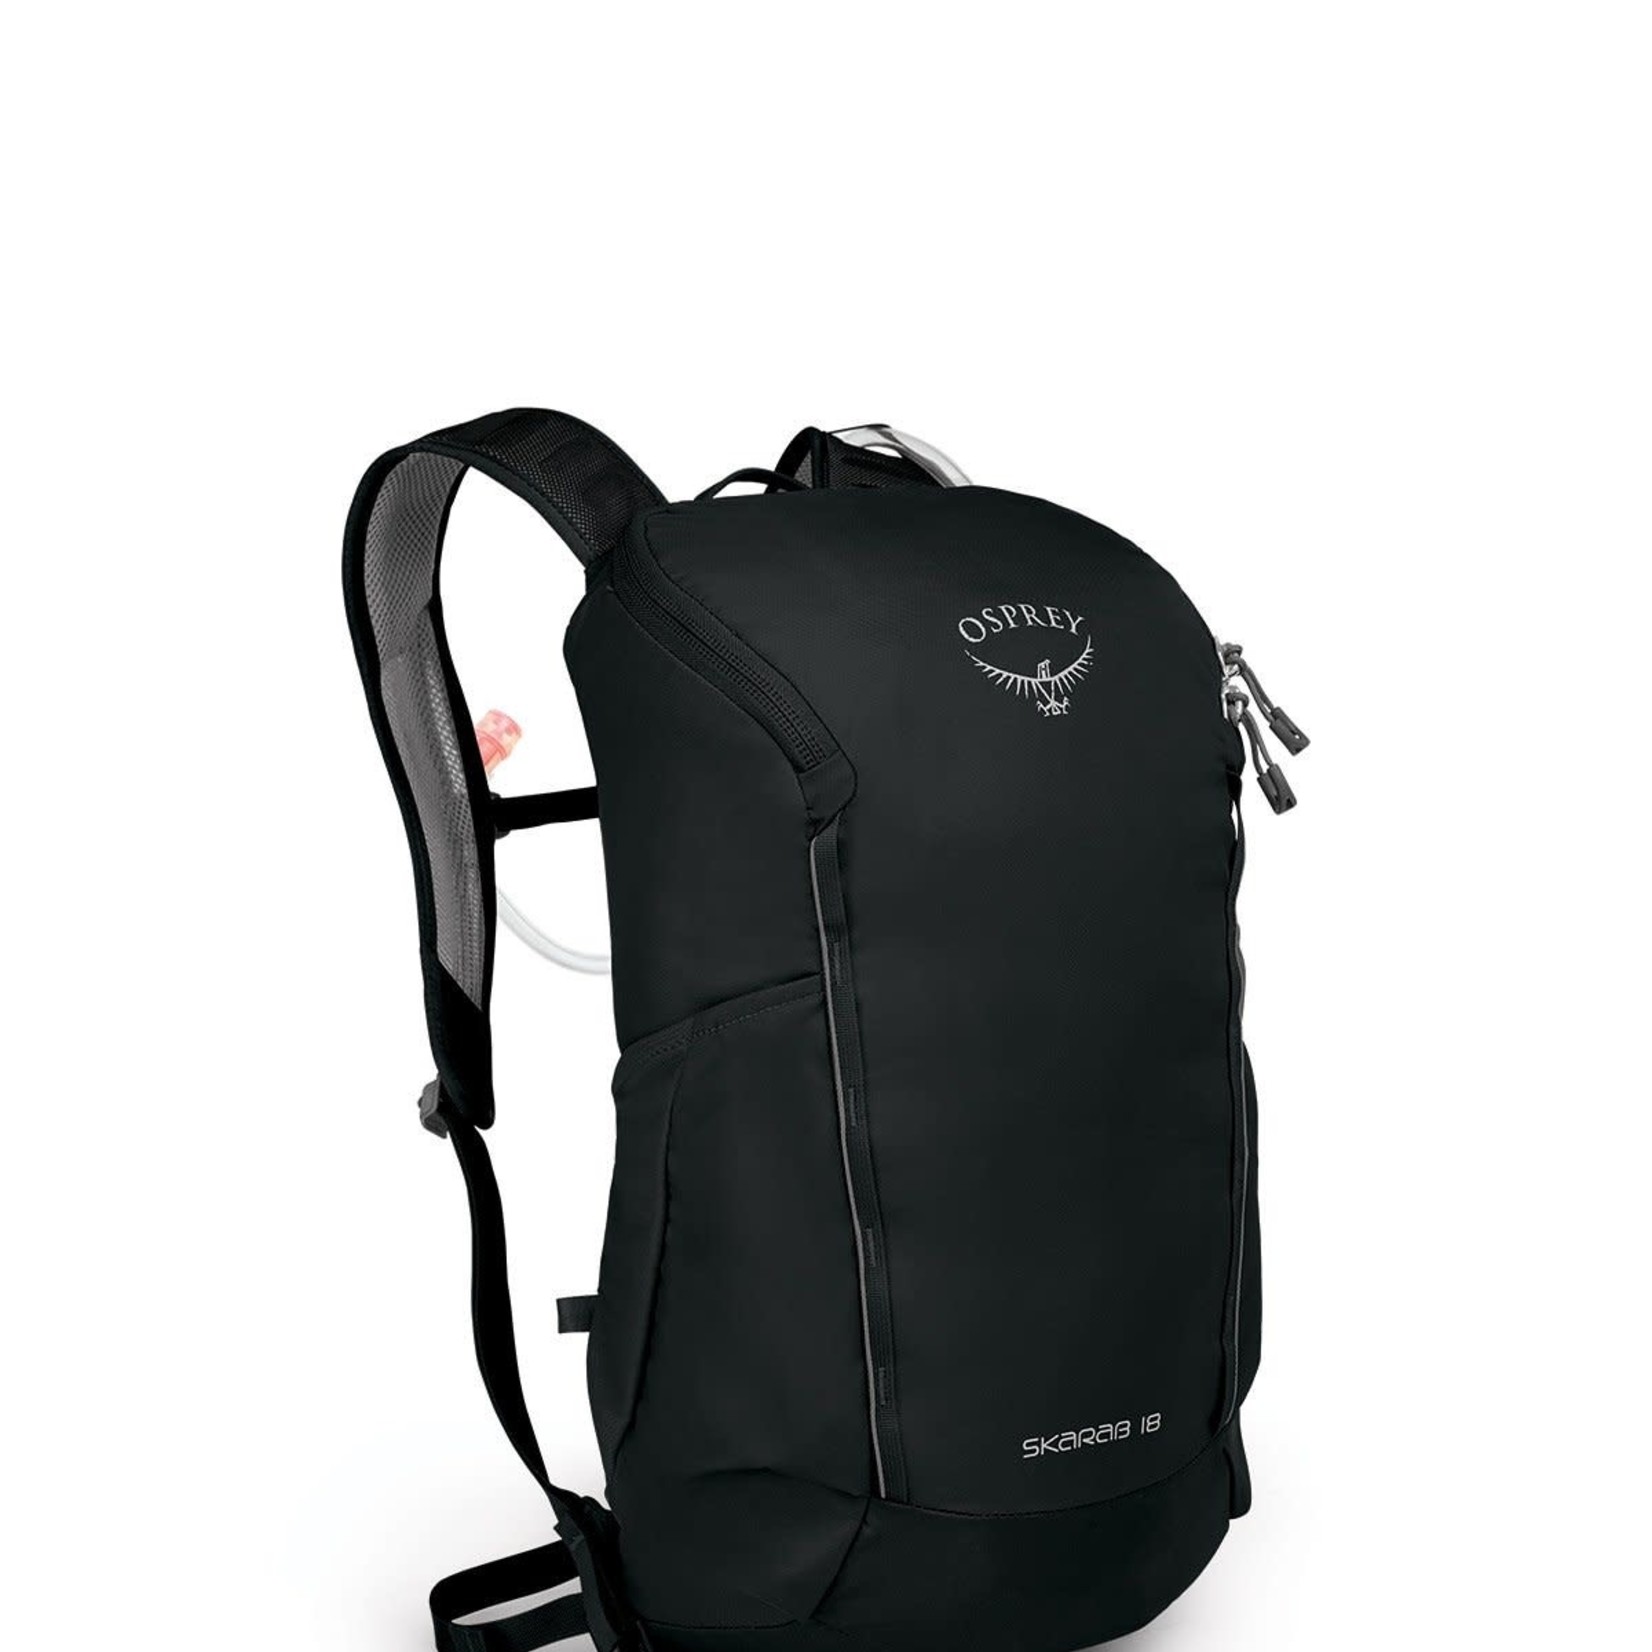 Osprey SKARAB 18 backpack